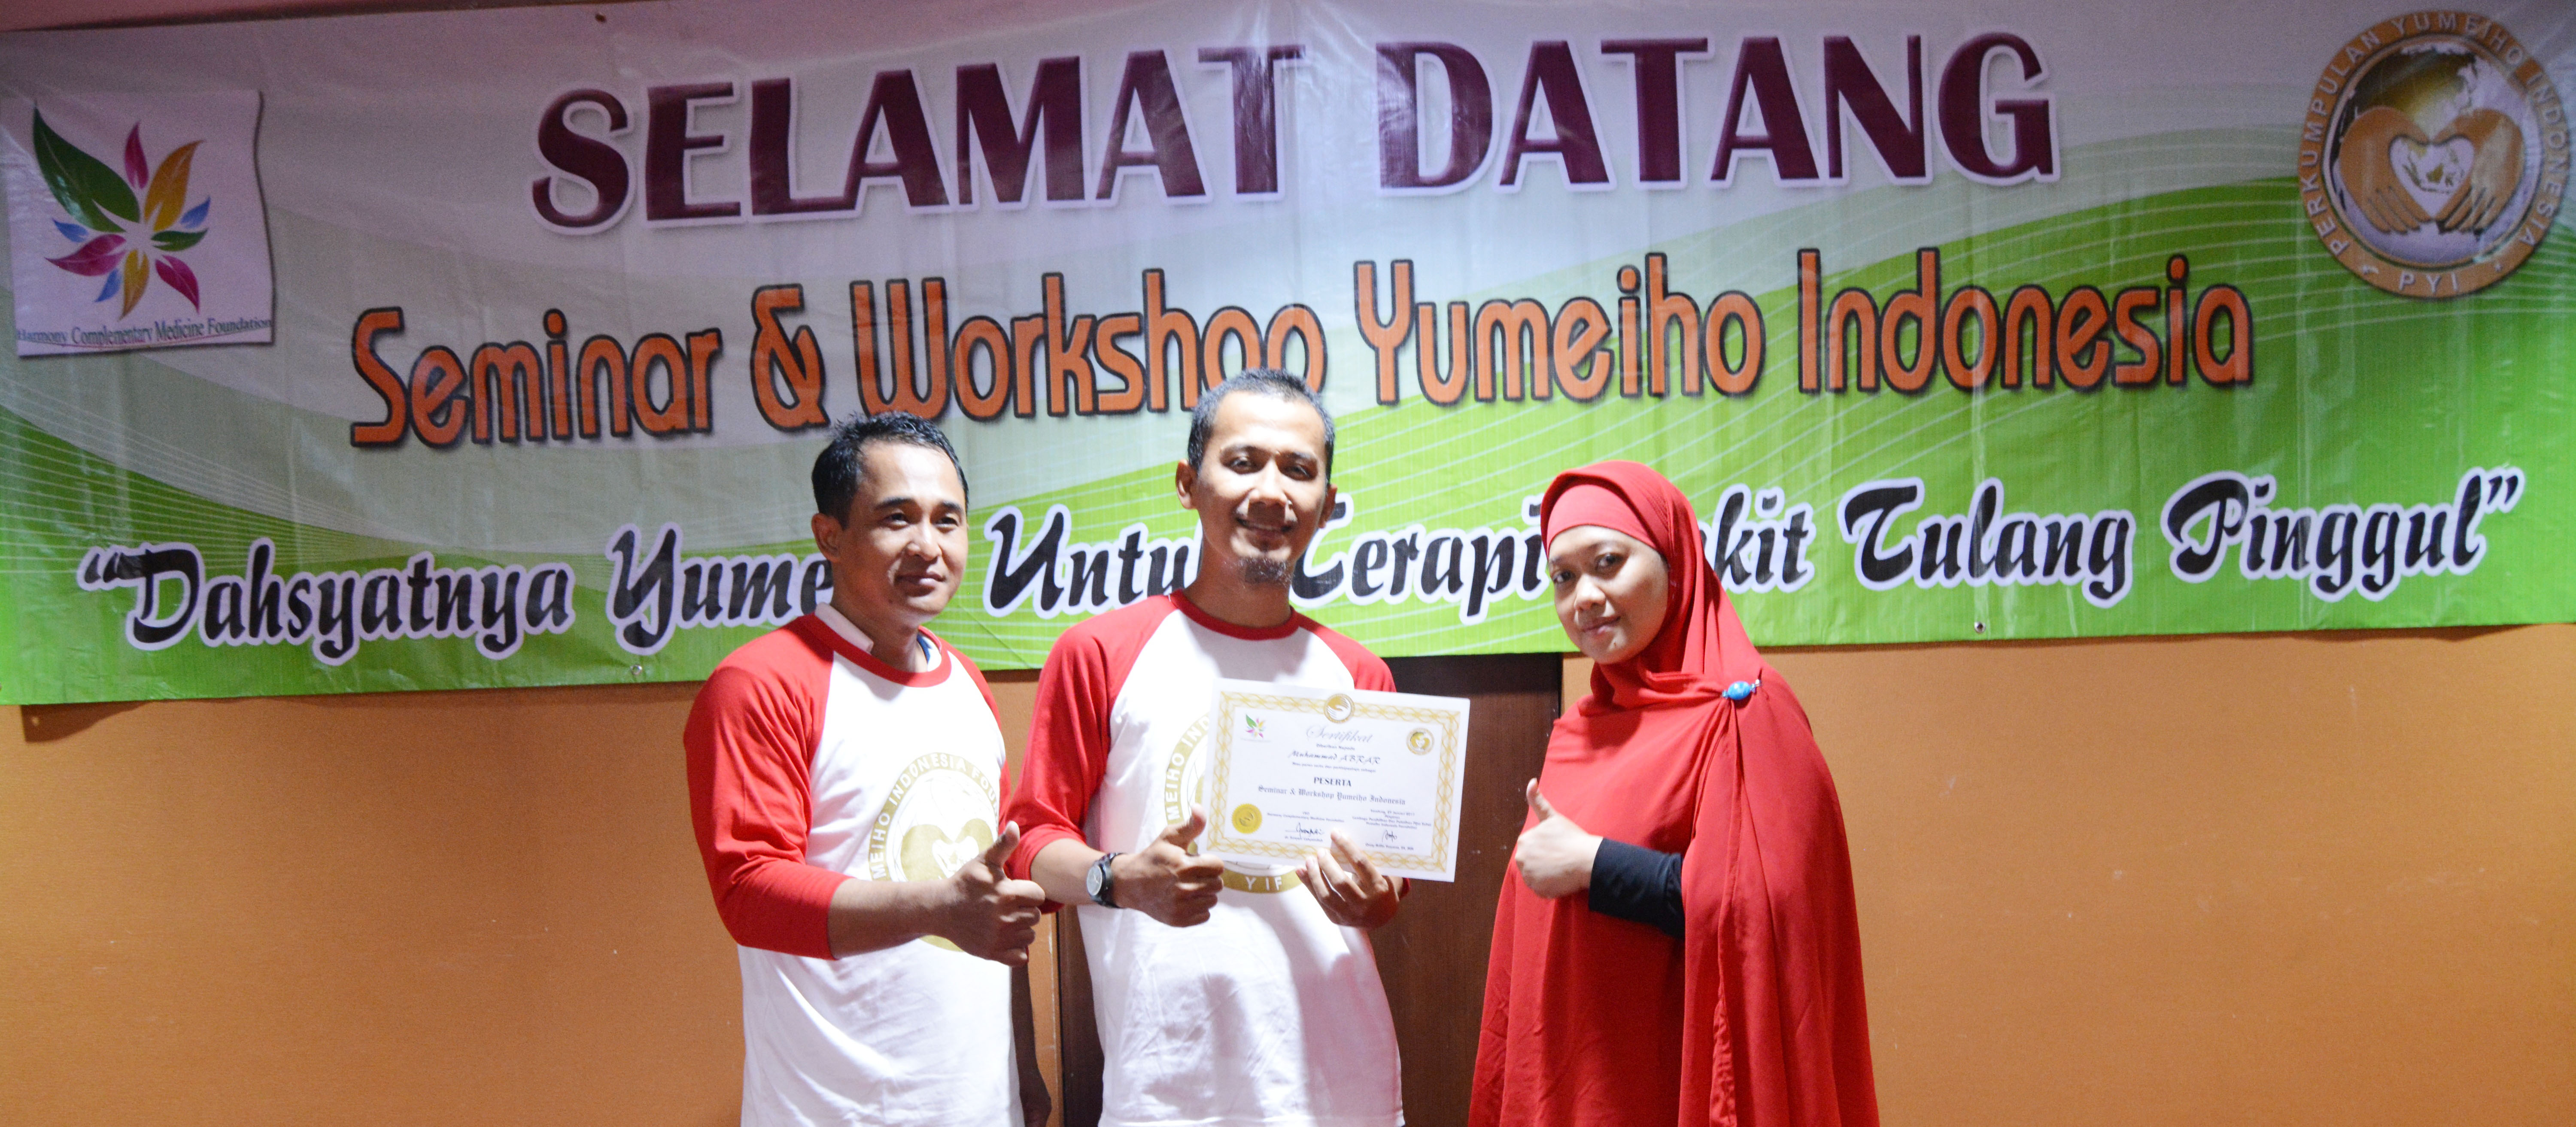 Seminar & Workshop Yumeiho di Bandung  Terapi Yumeiho 